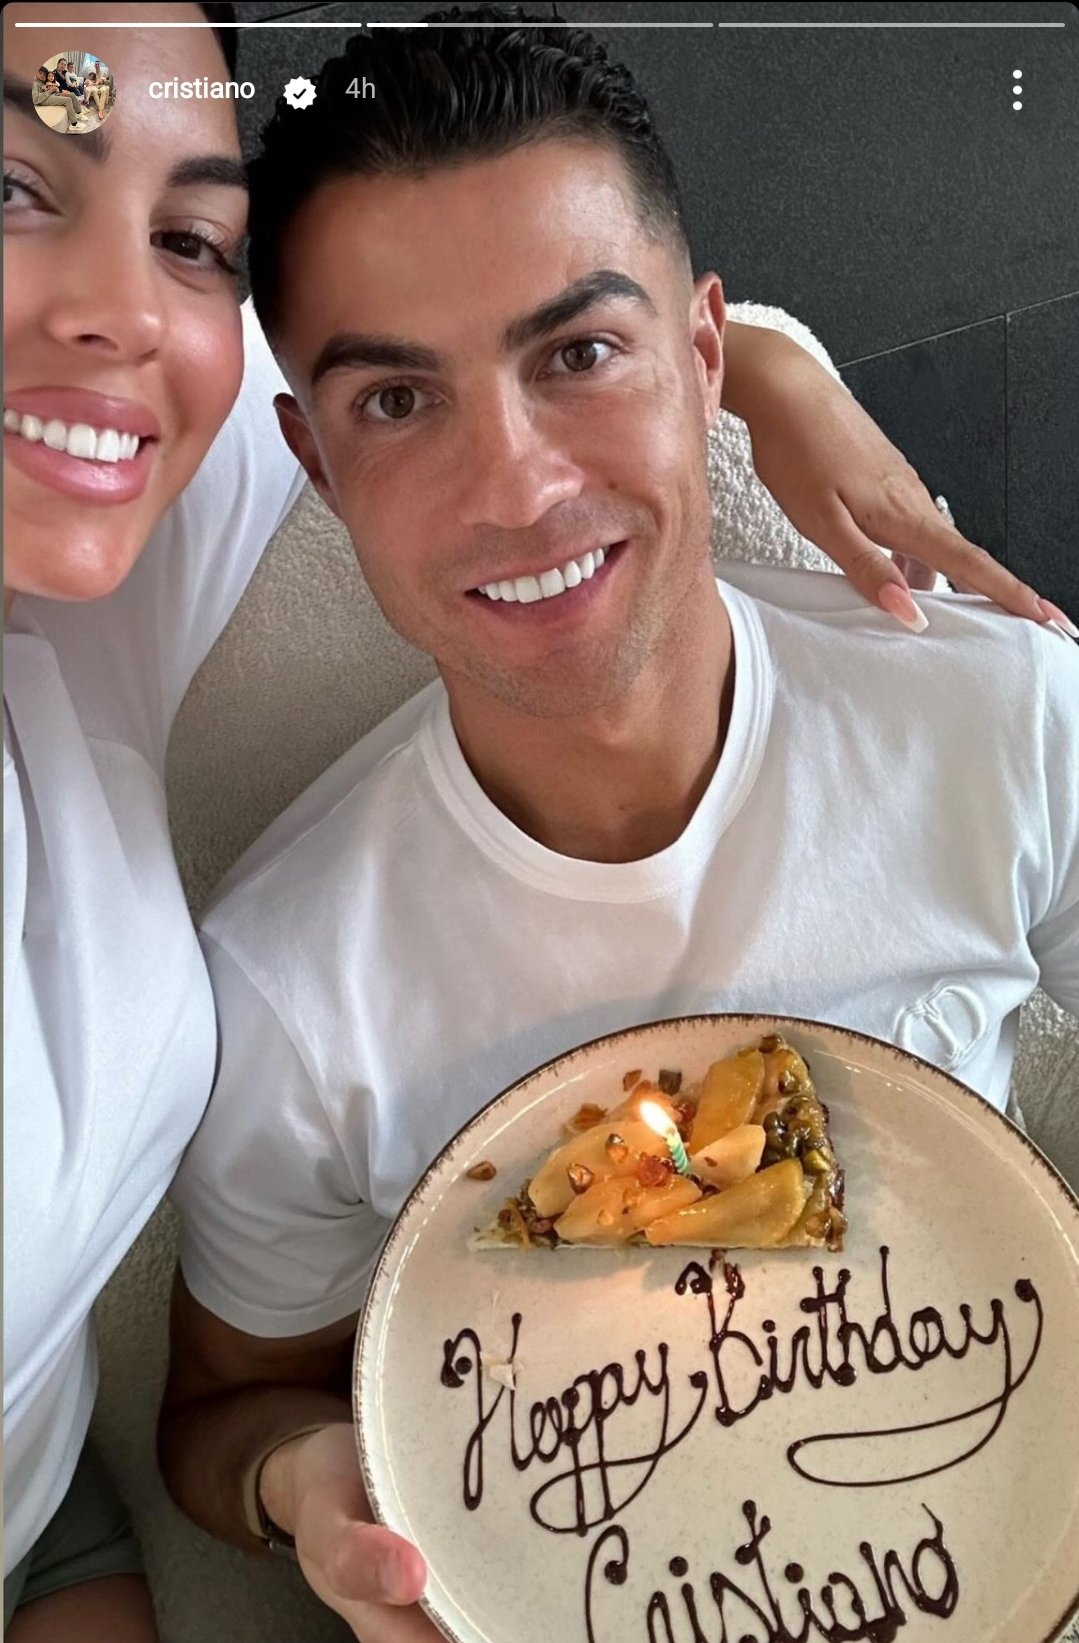 Blossoming Creations - Cristiano Ronaldo 8th Birthday cake  #cristianoronaldo #cristianoronaldocake #melsblossomingcreations  #orangecakemaker | Facebook